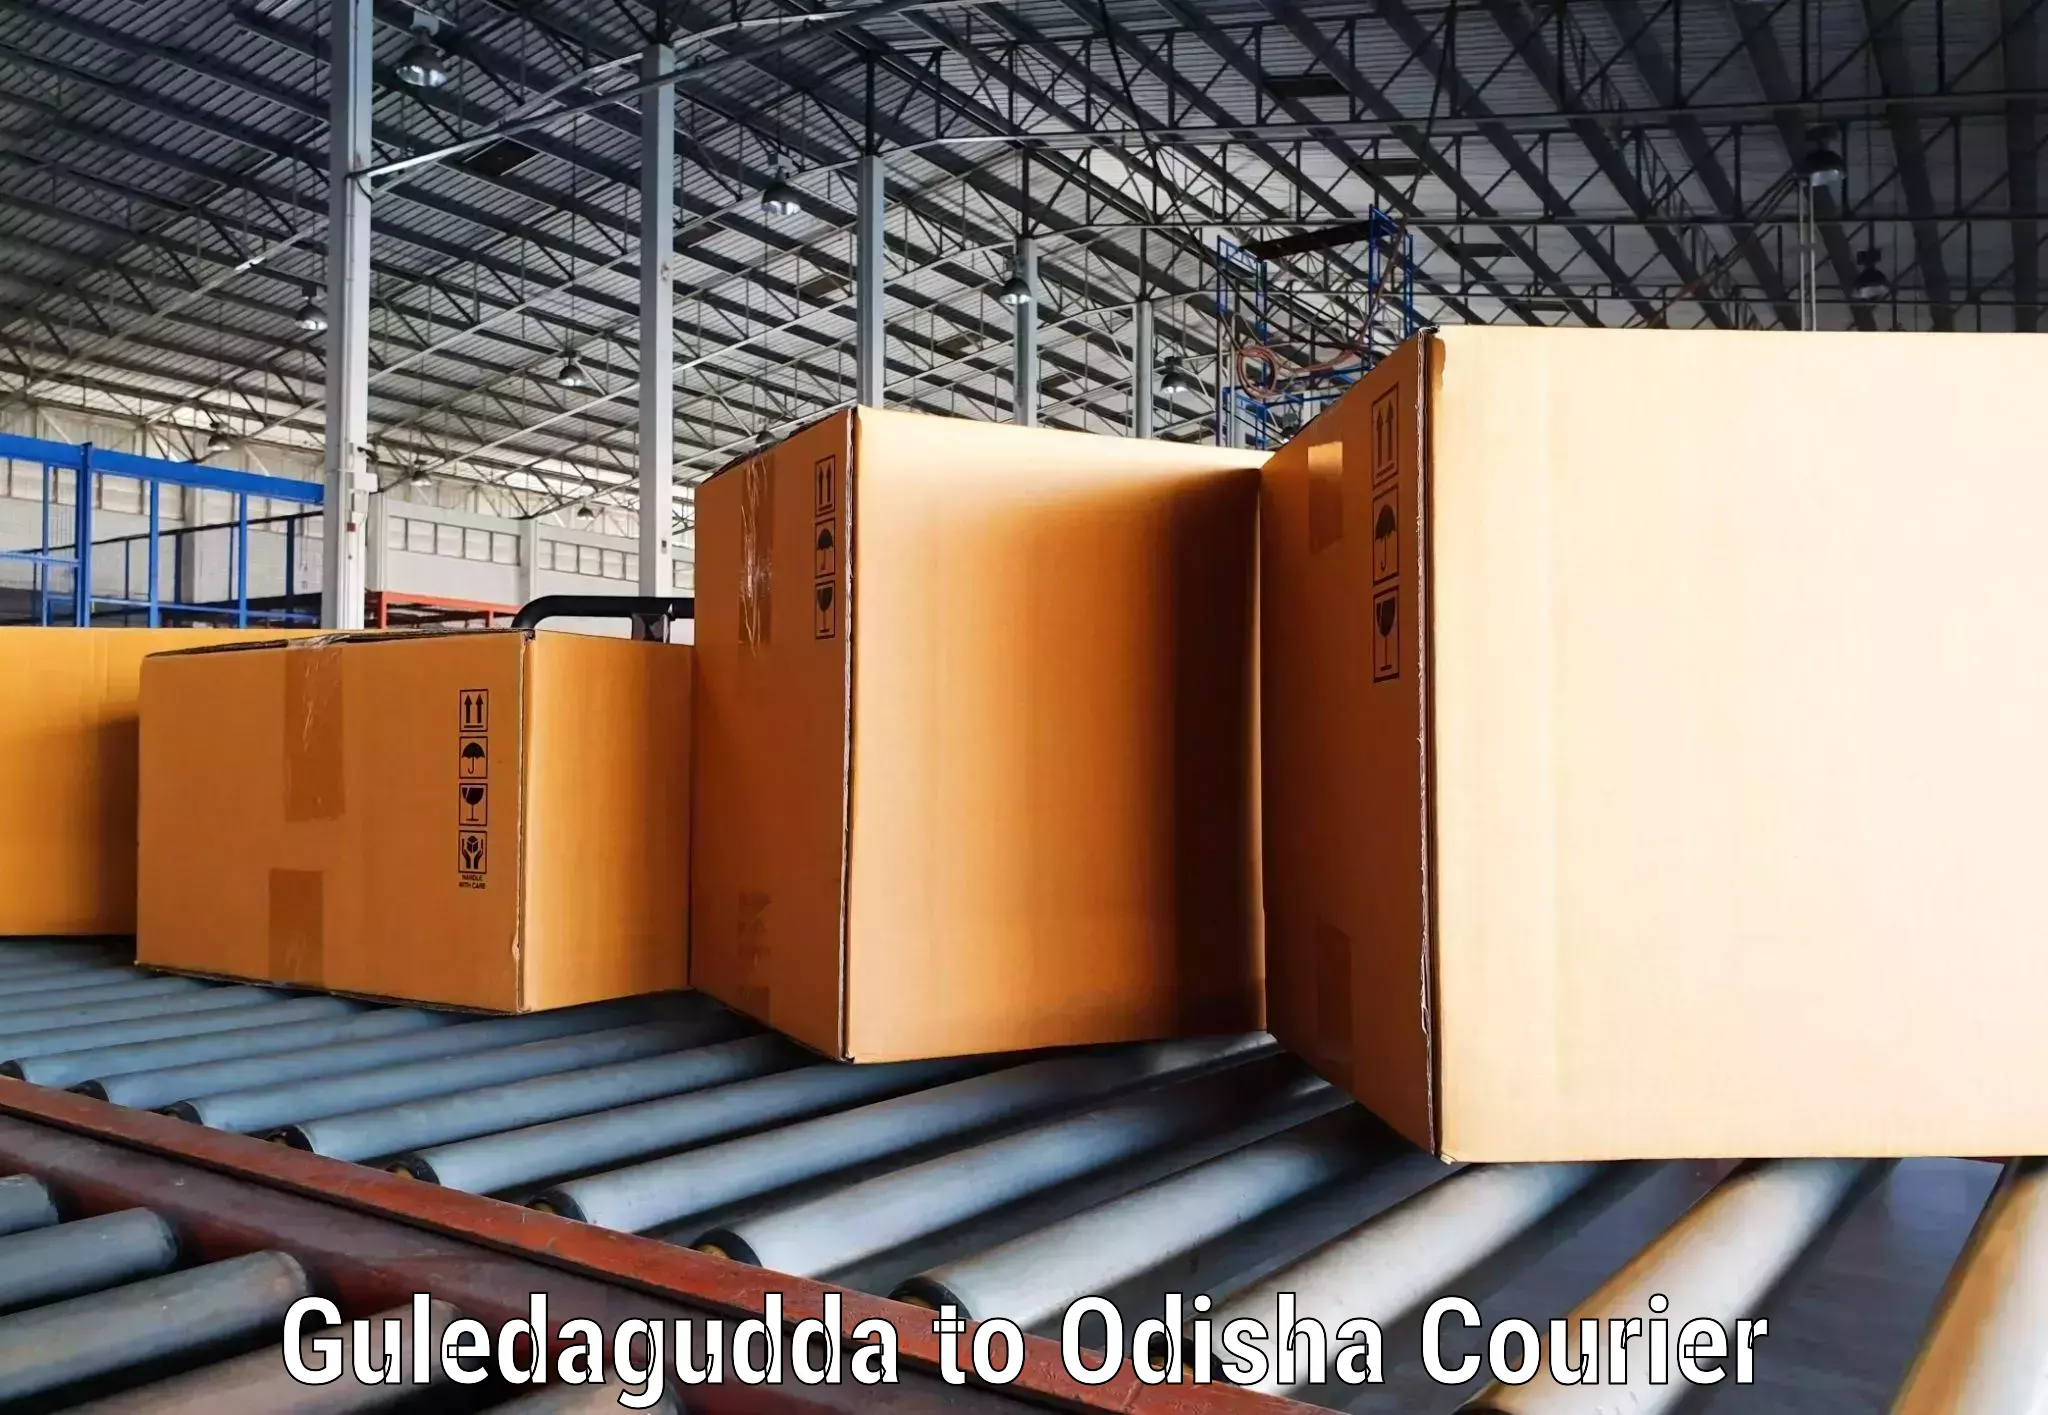 Tech-enabled shipping Guledagudda to Sankerko